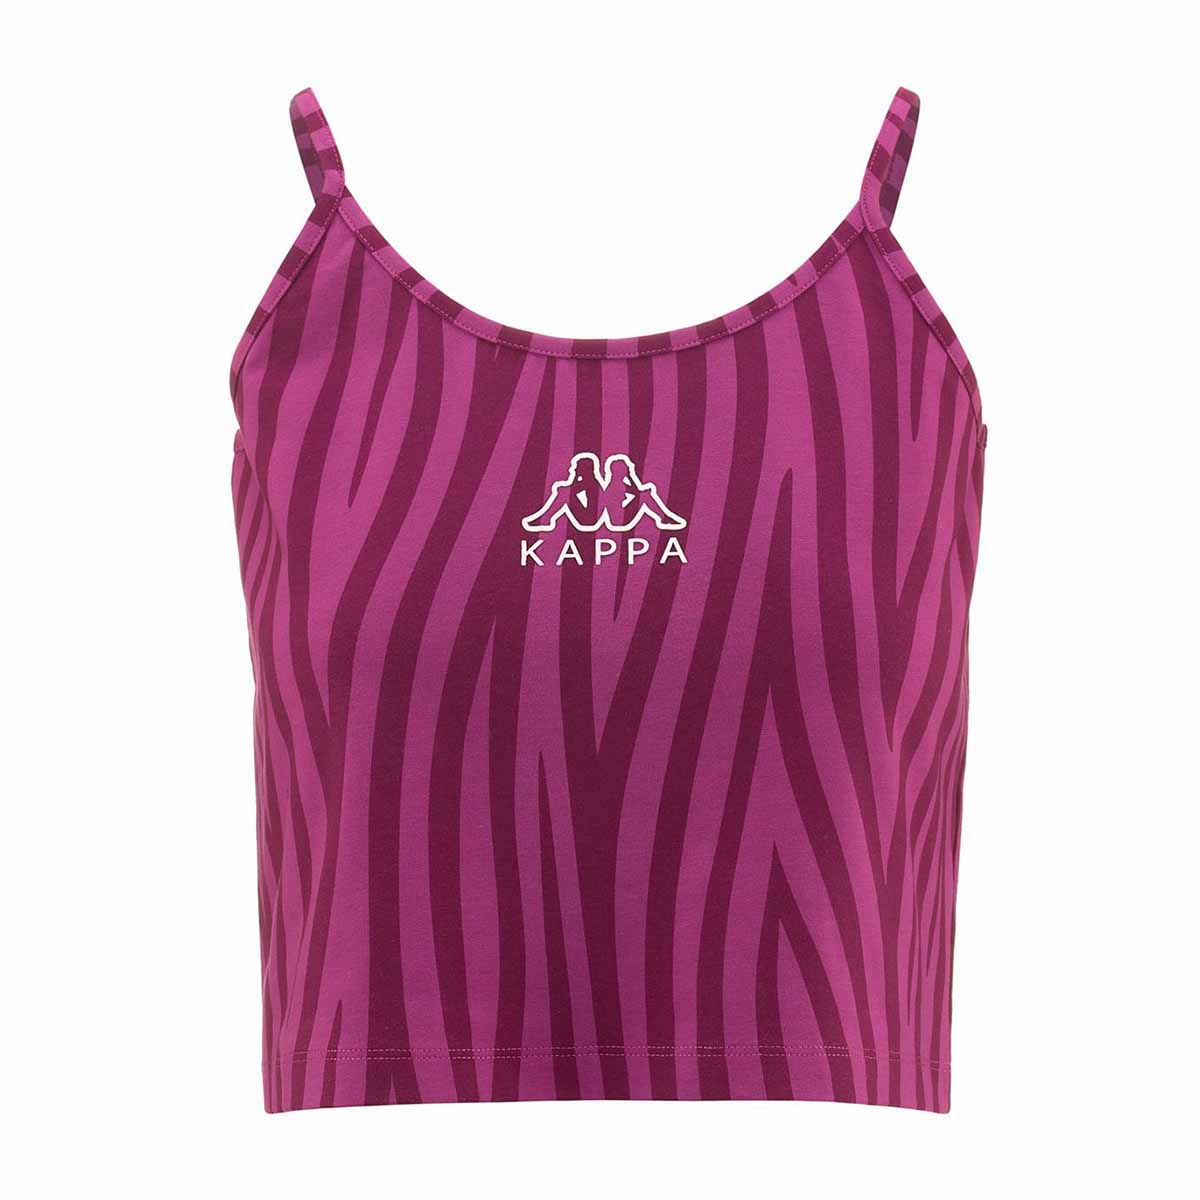 Camiseta Kappa Eleina - rosa - 